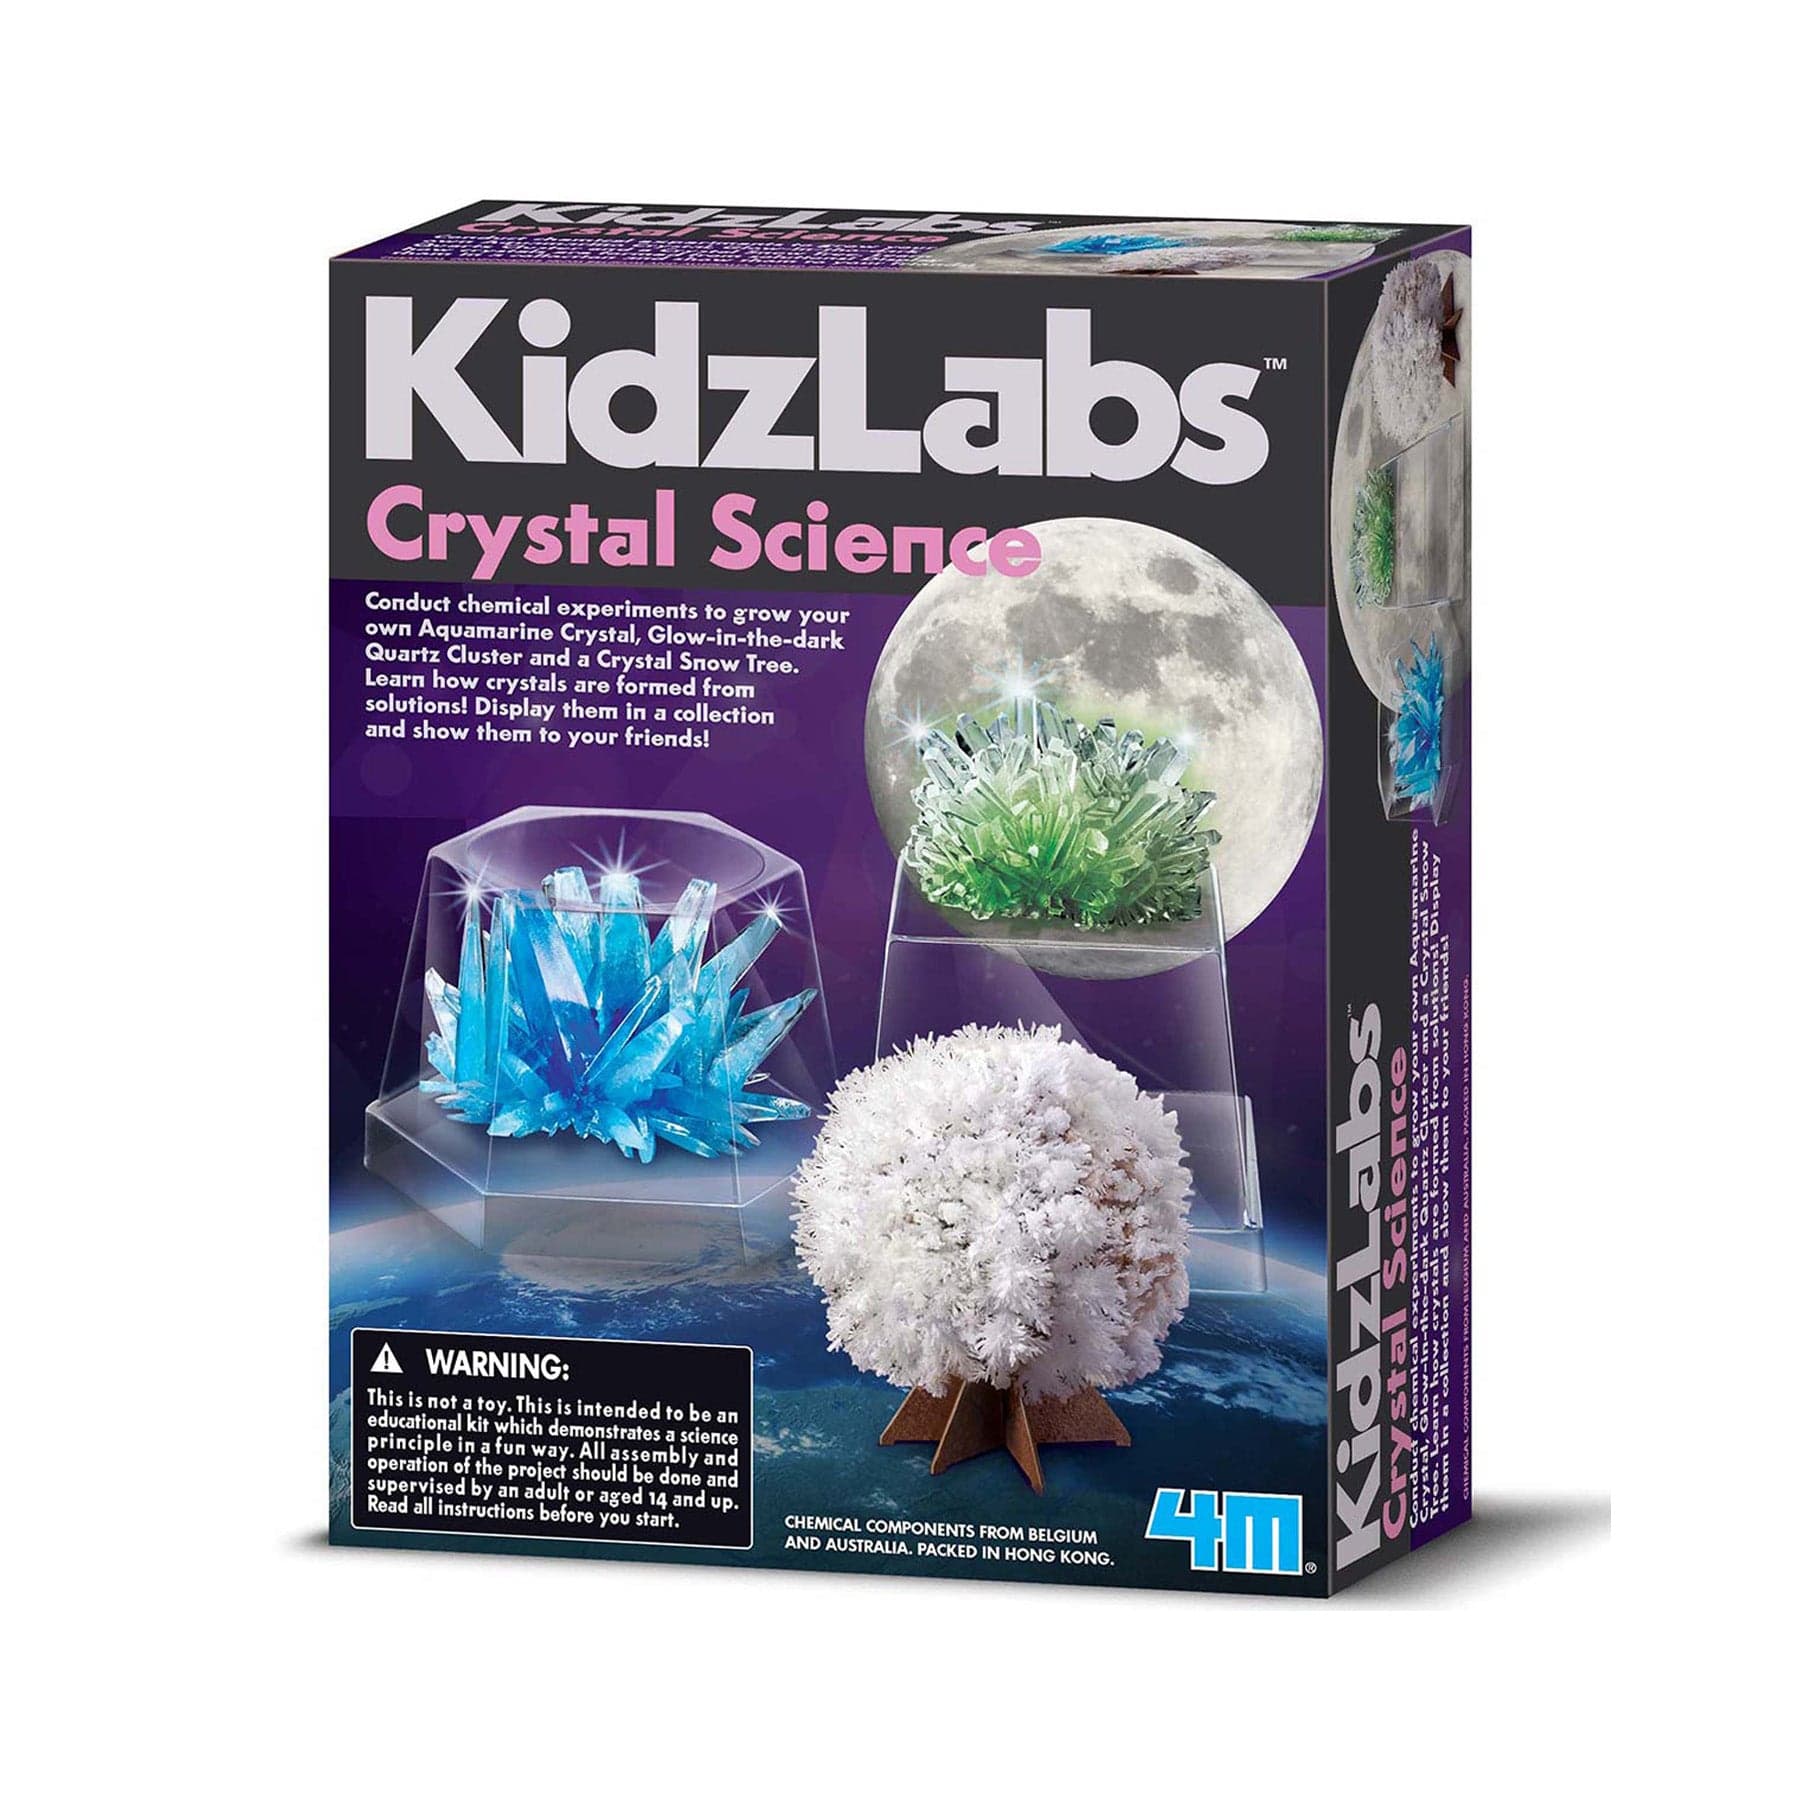 Crystal science kit